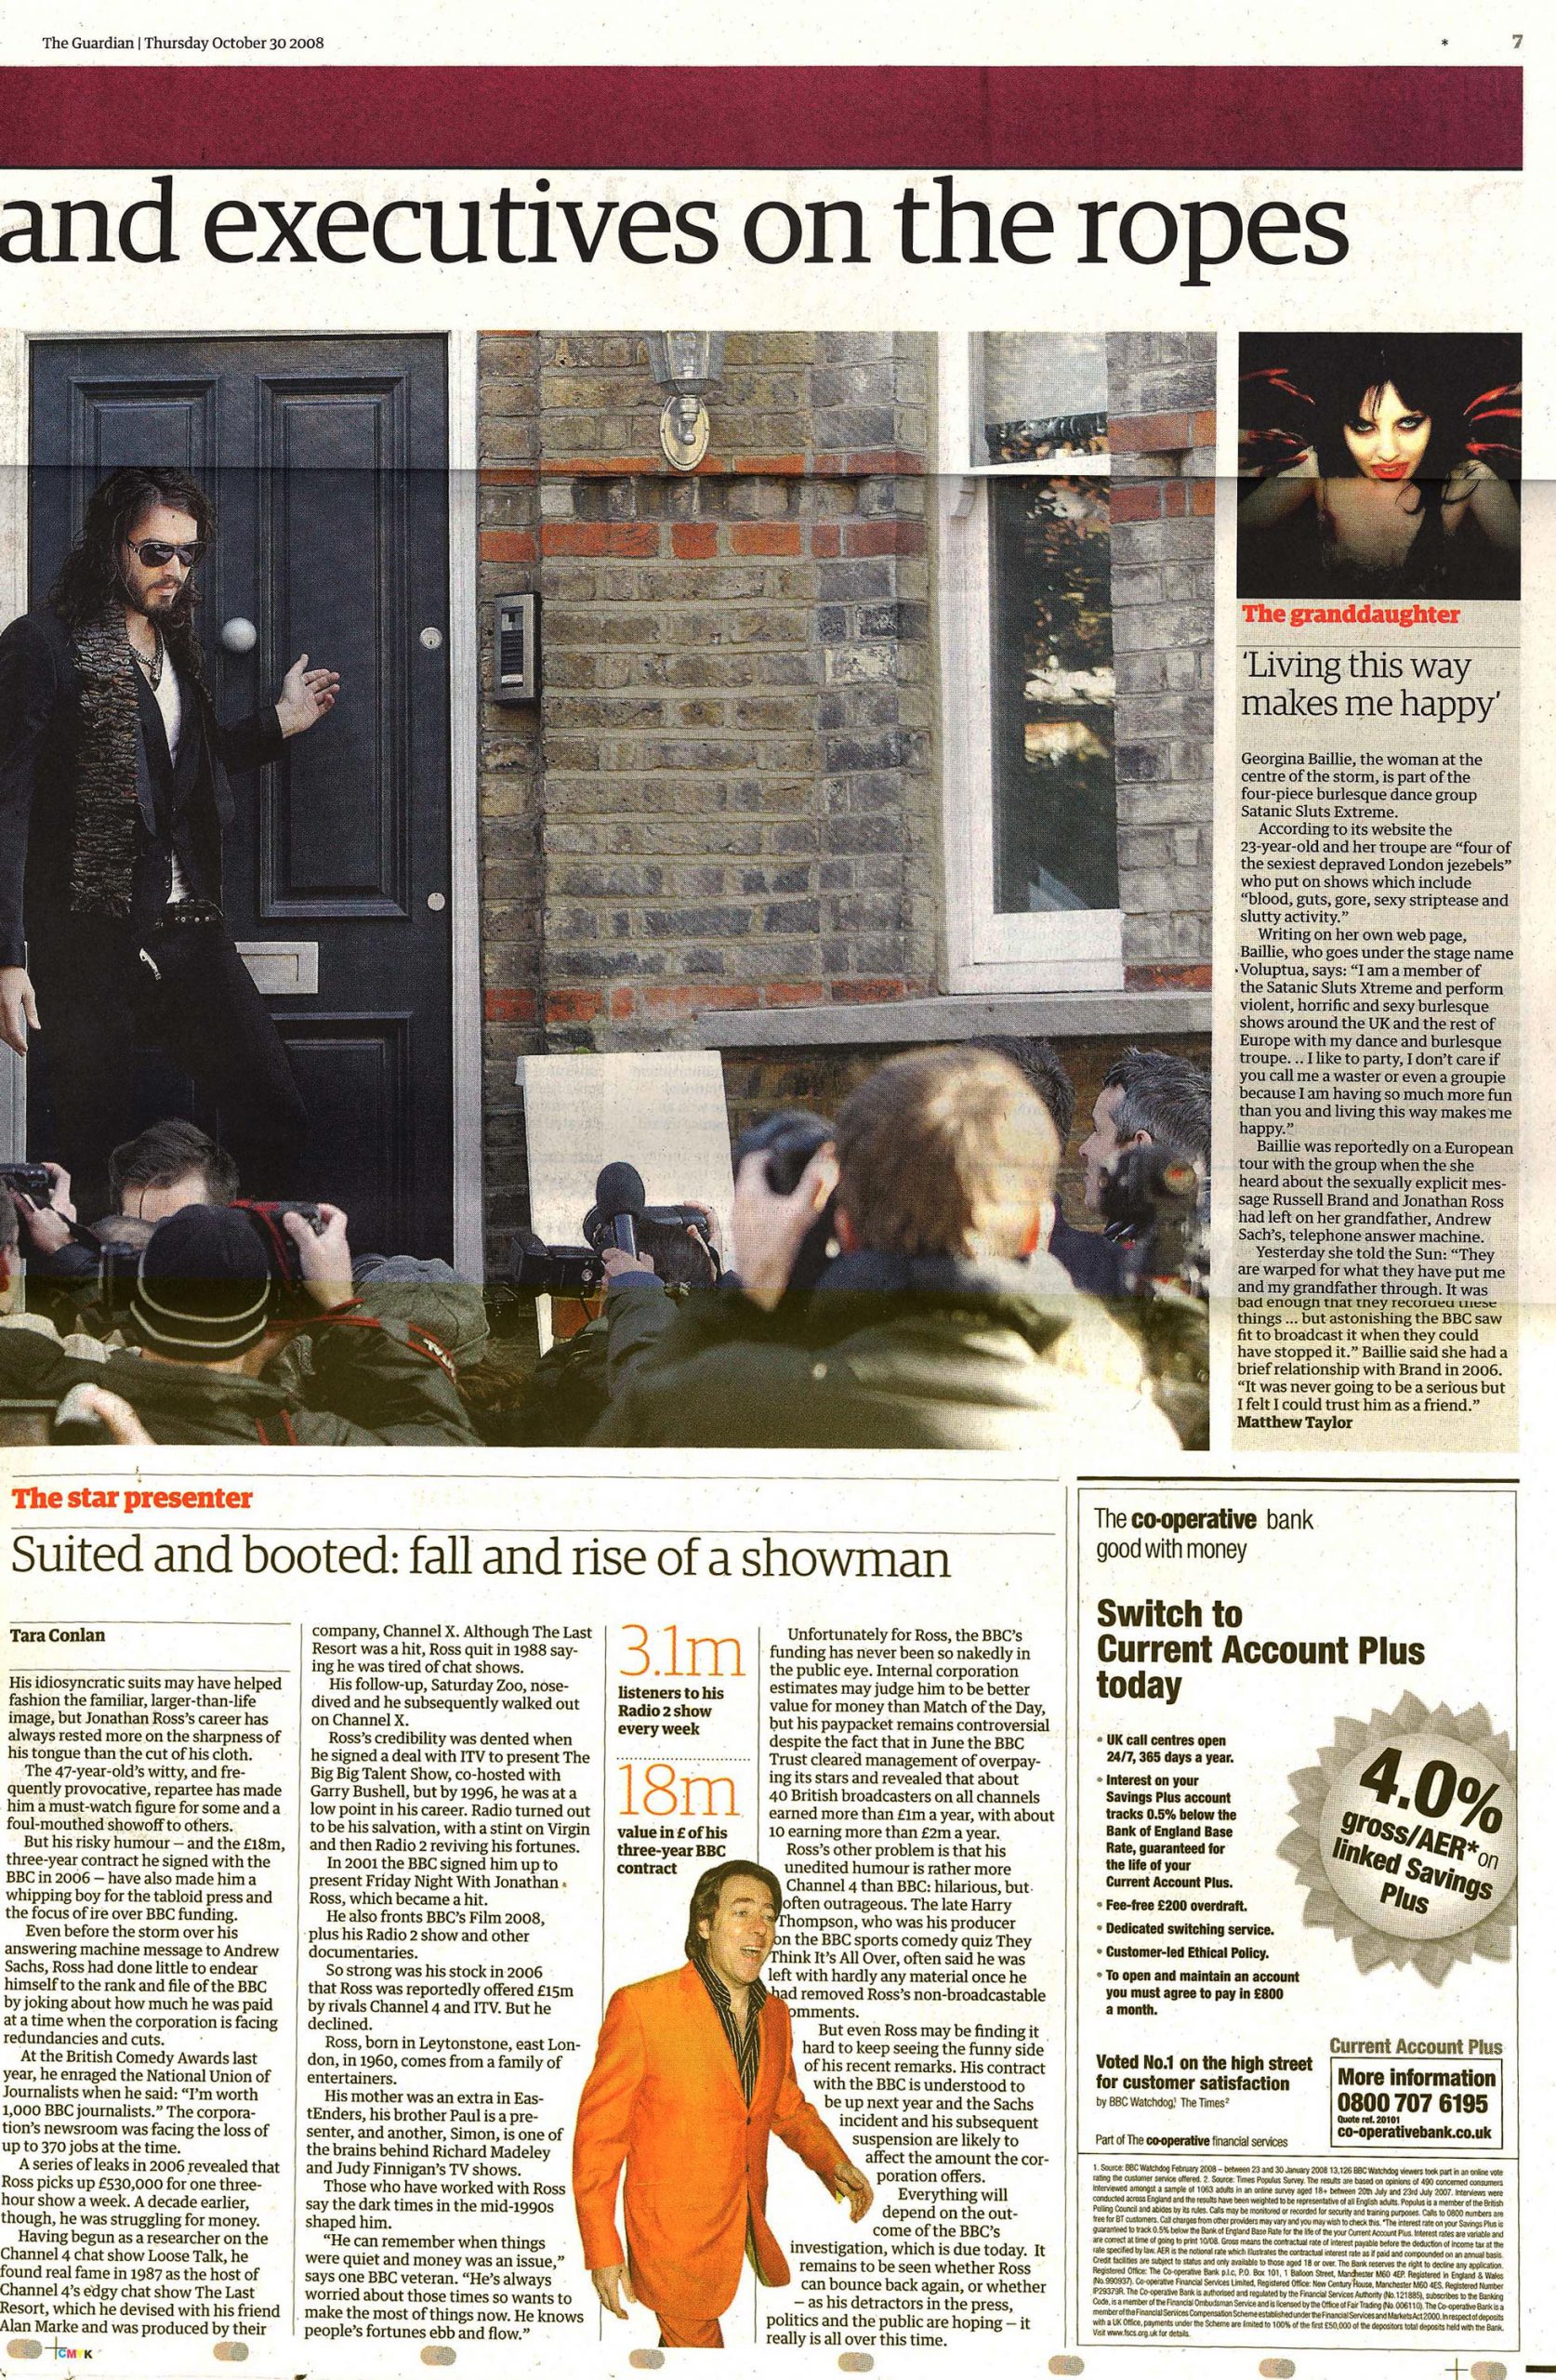 Sachsgate Evening Standard 20081028